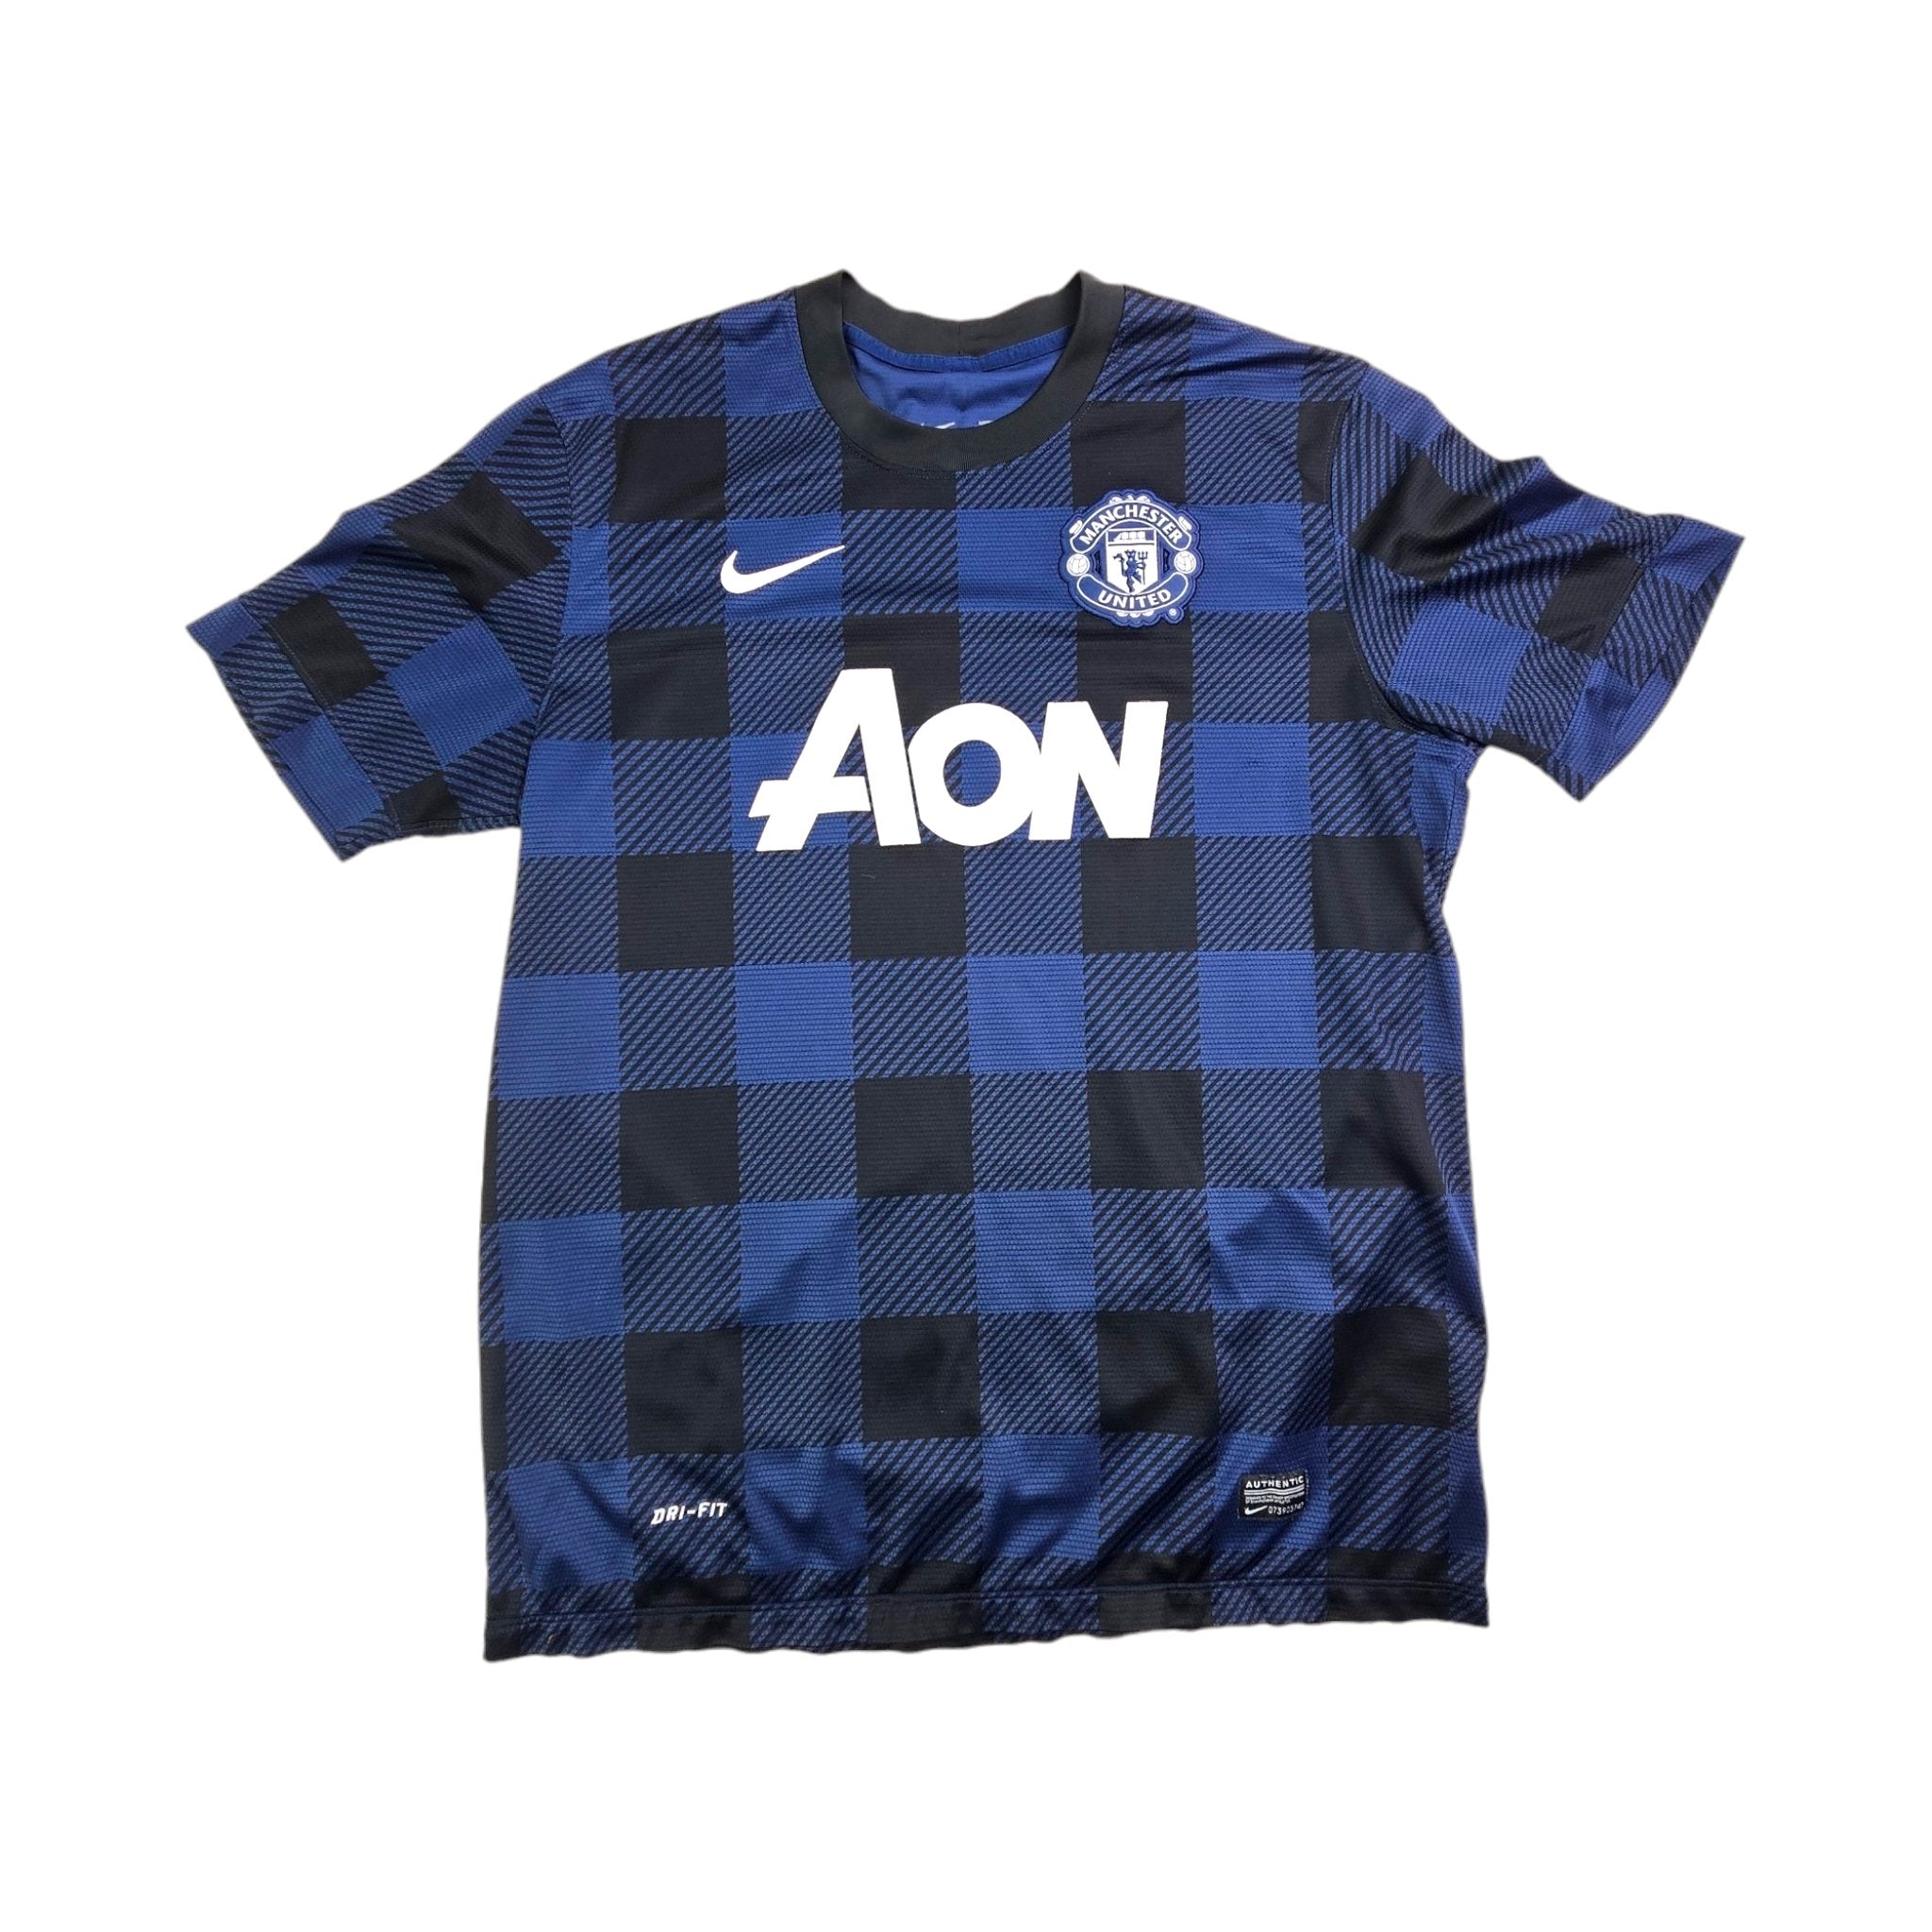 2013/14 Manchester United Away Football Shirt (L) Nike #4 Jones 